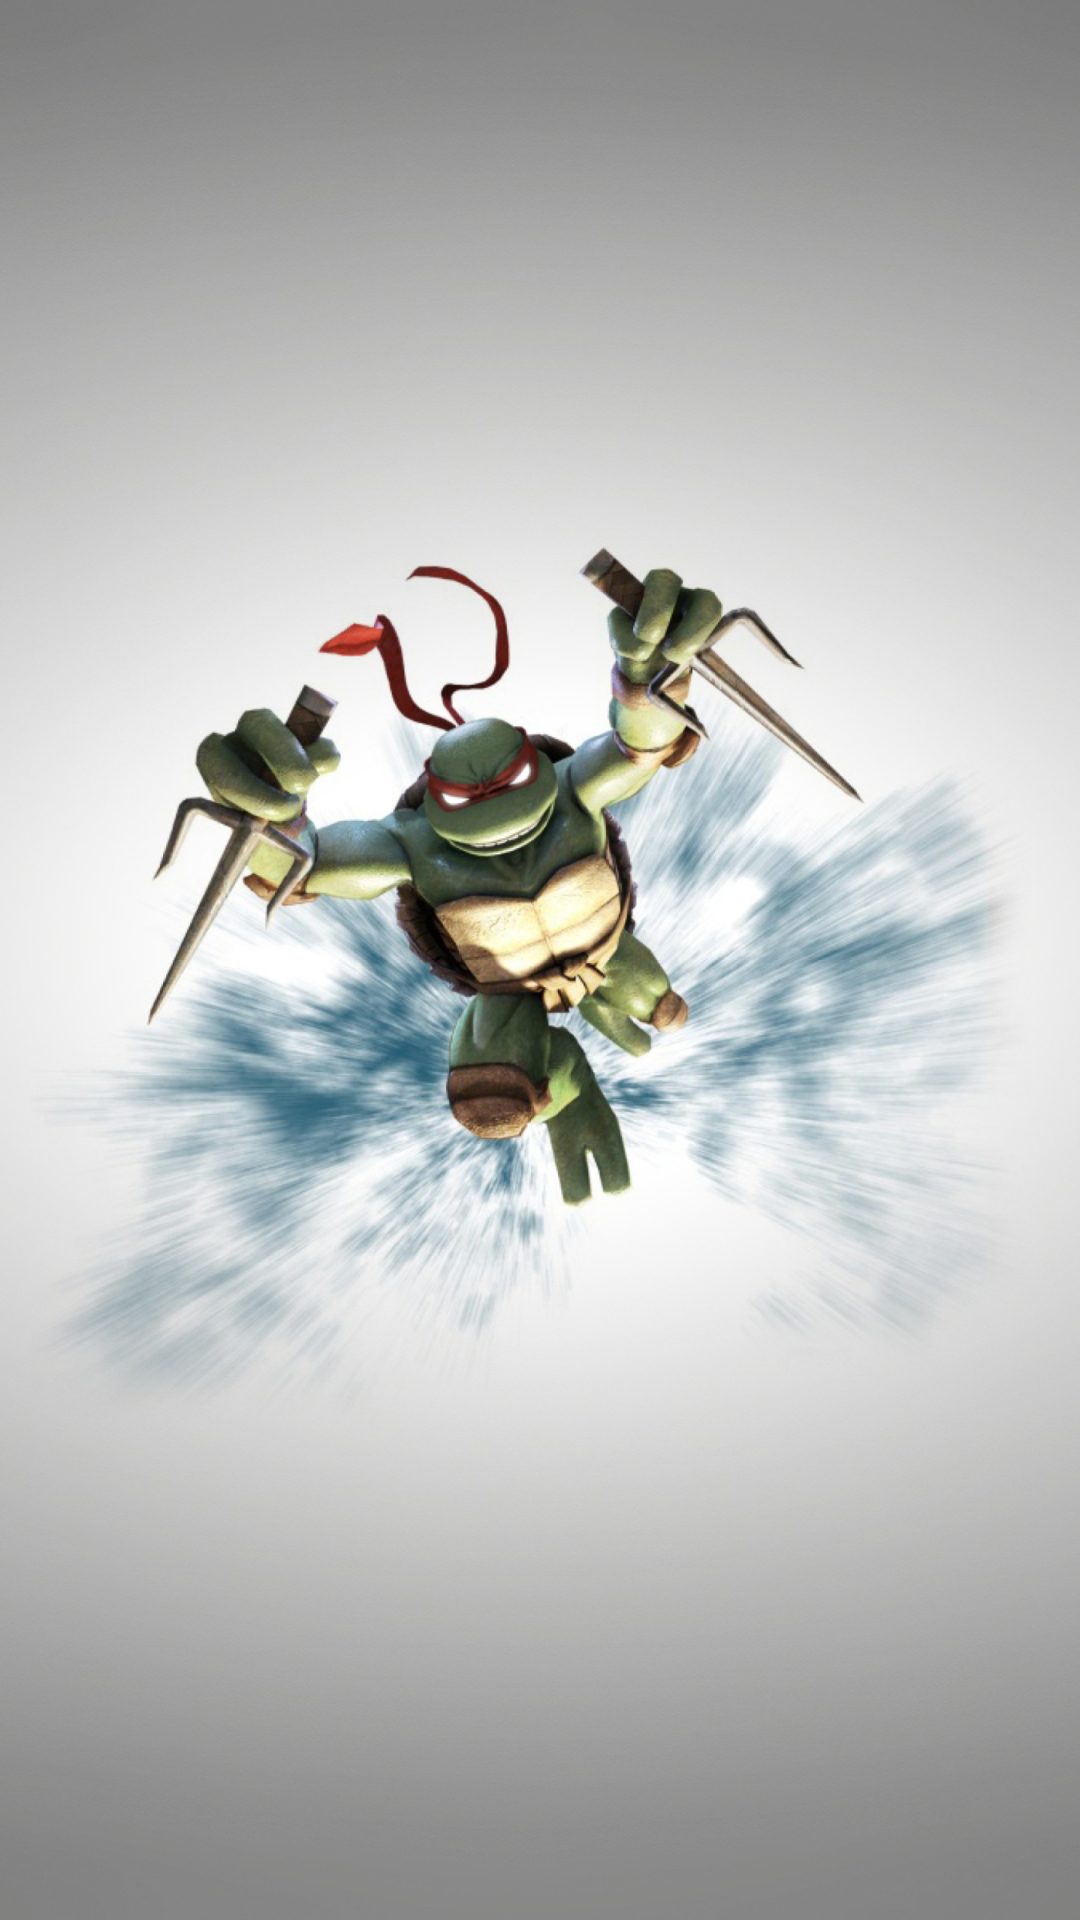 Ninja Turtle IPhone Wallpaper 75 images